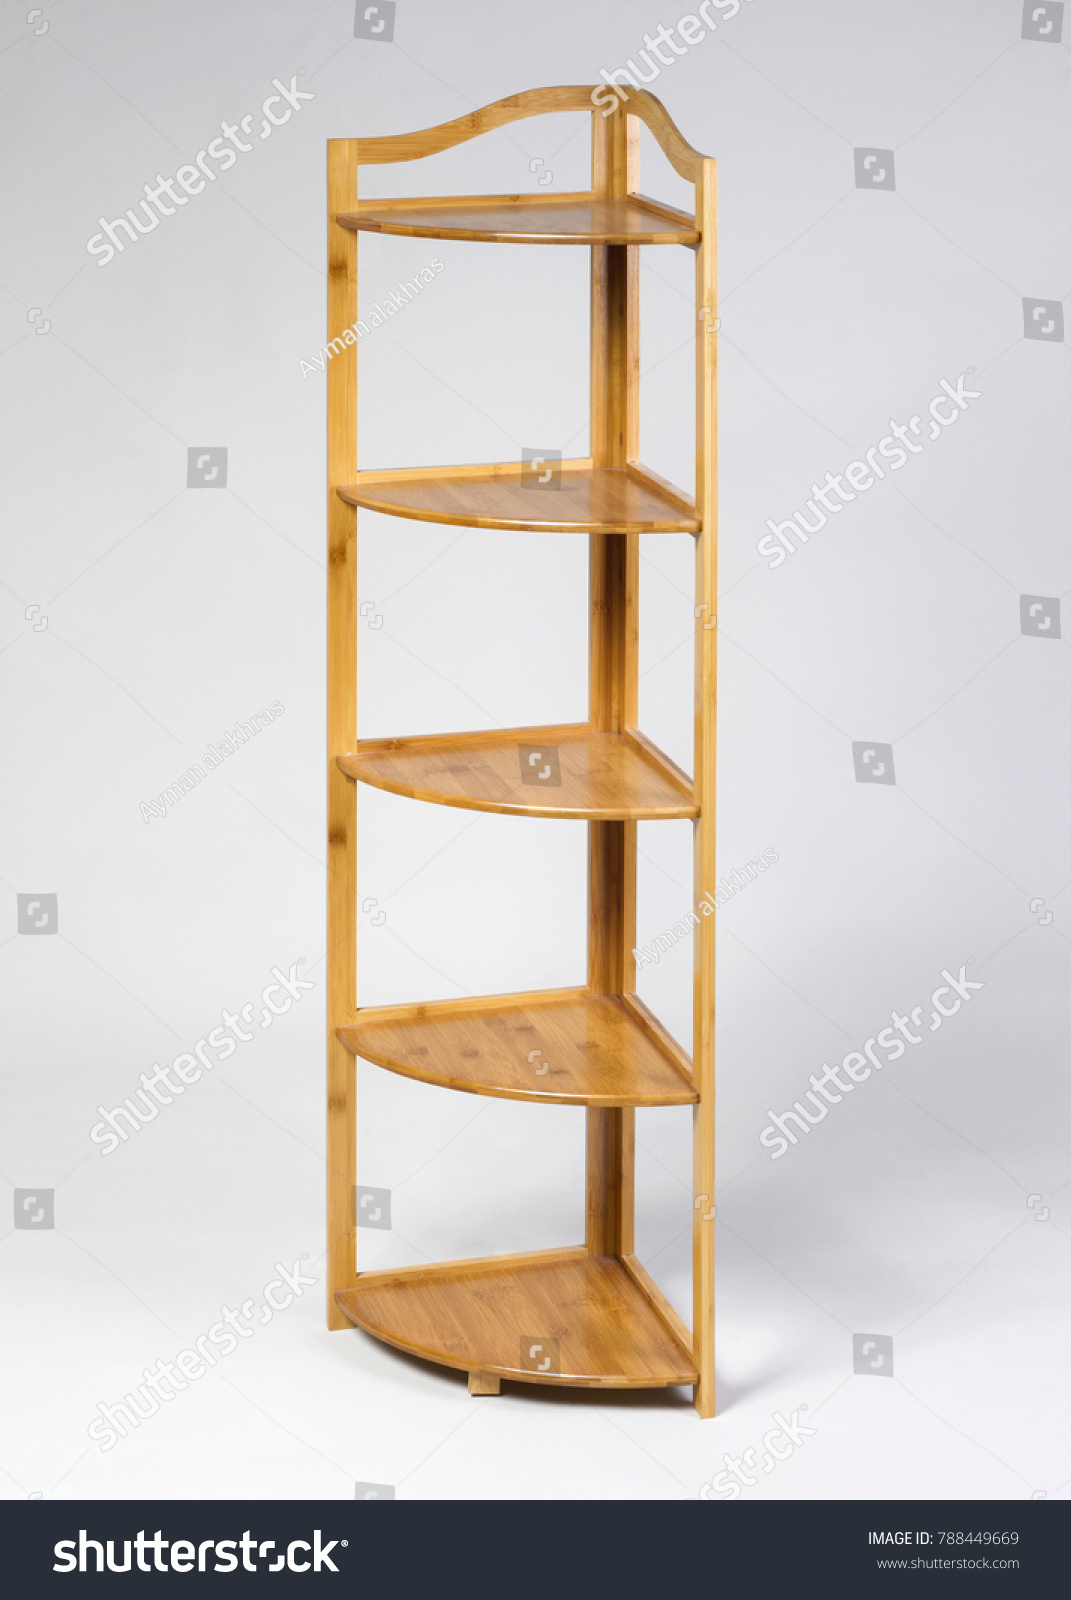 Wooden Corner Shelves Unit Isolated On Stock Photo Edit Now